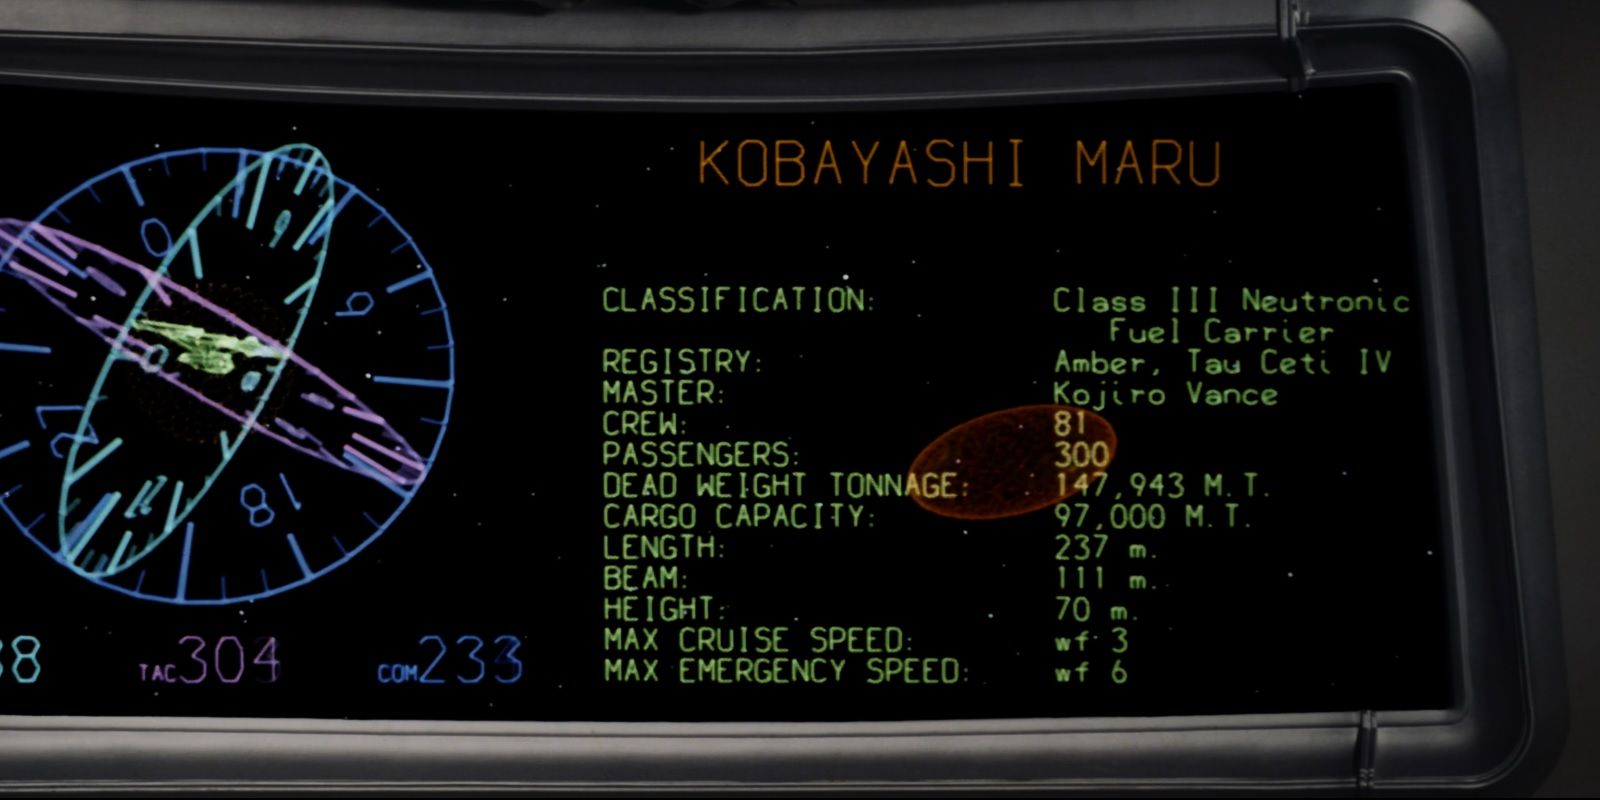 The Kobayashi Maru simulation in Star Trek: The Wrath of Khan.